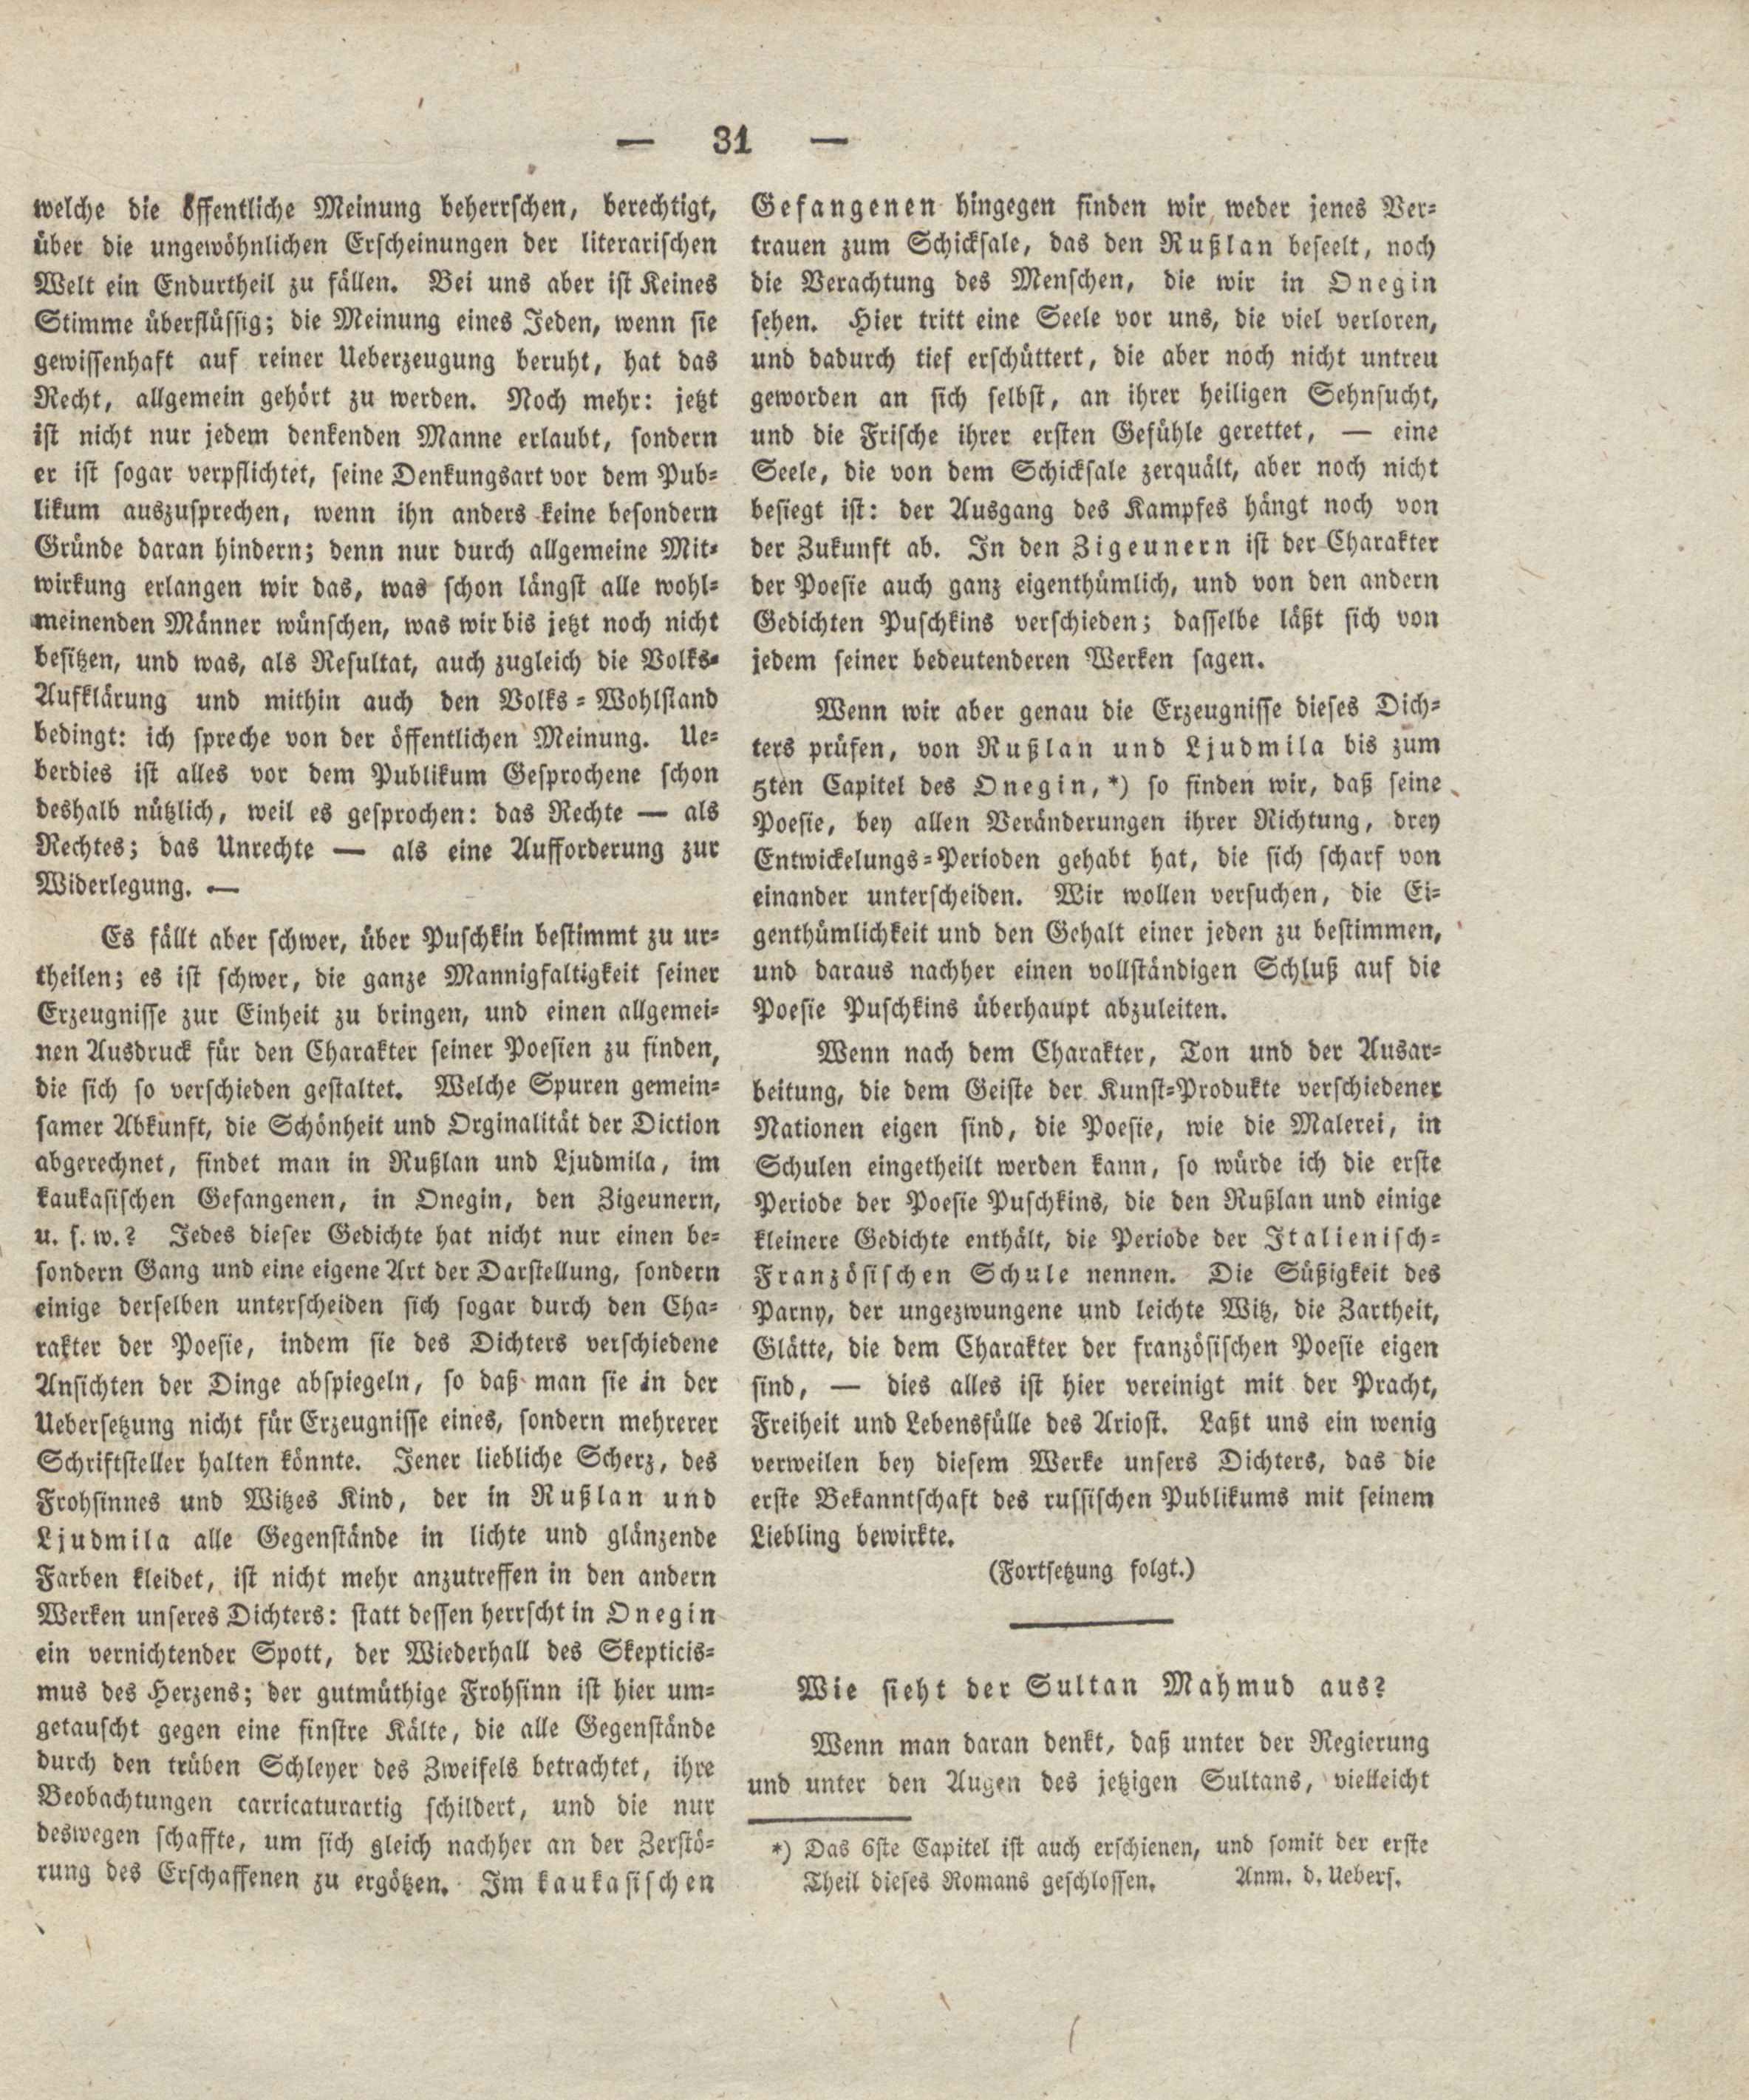 Wie sieht der Sultan Mahmud aus? (1828) | 1. (31) Основной текст